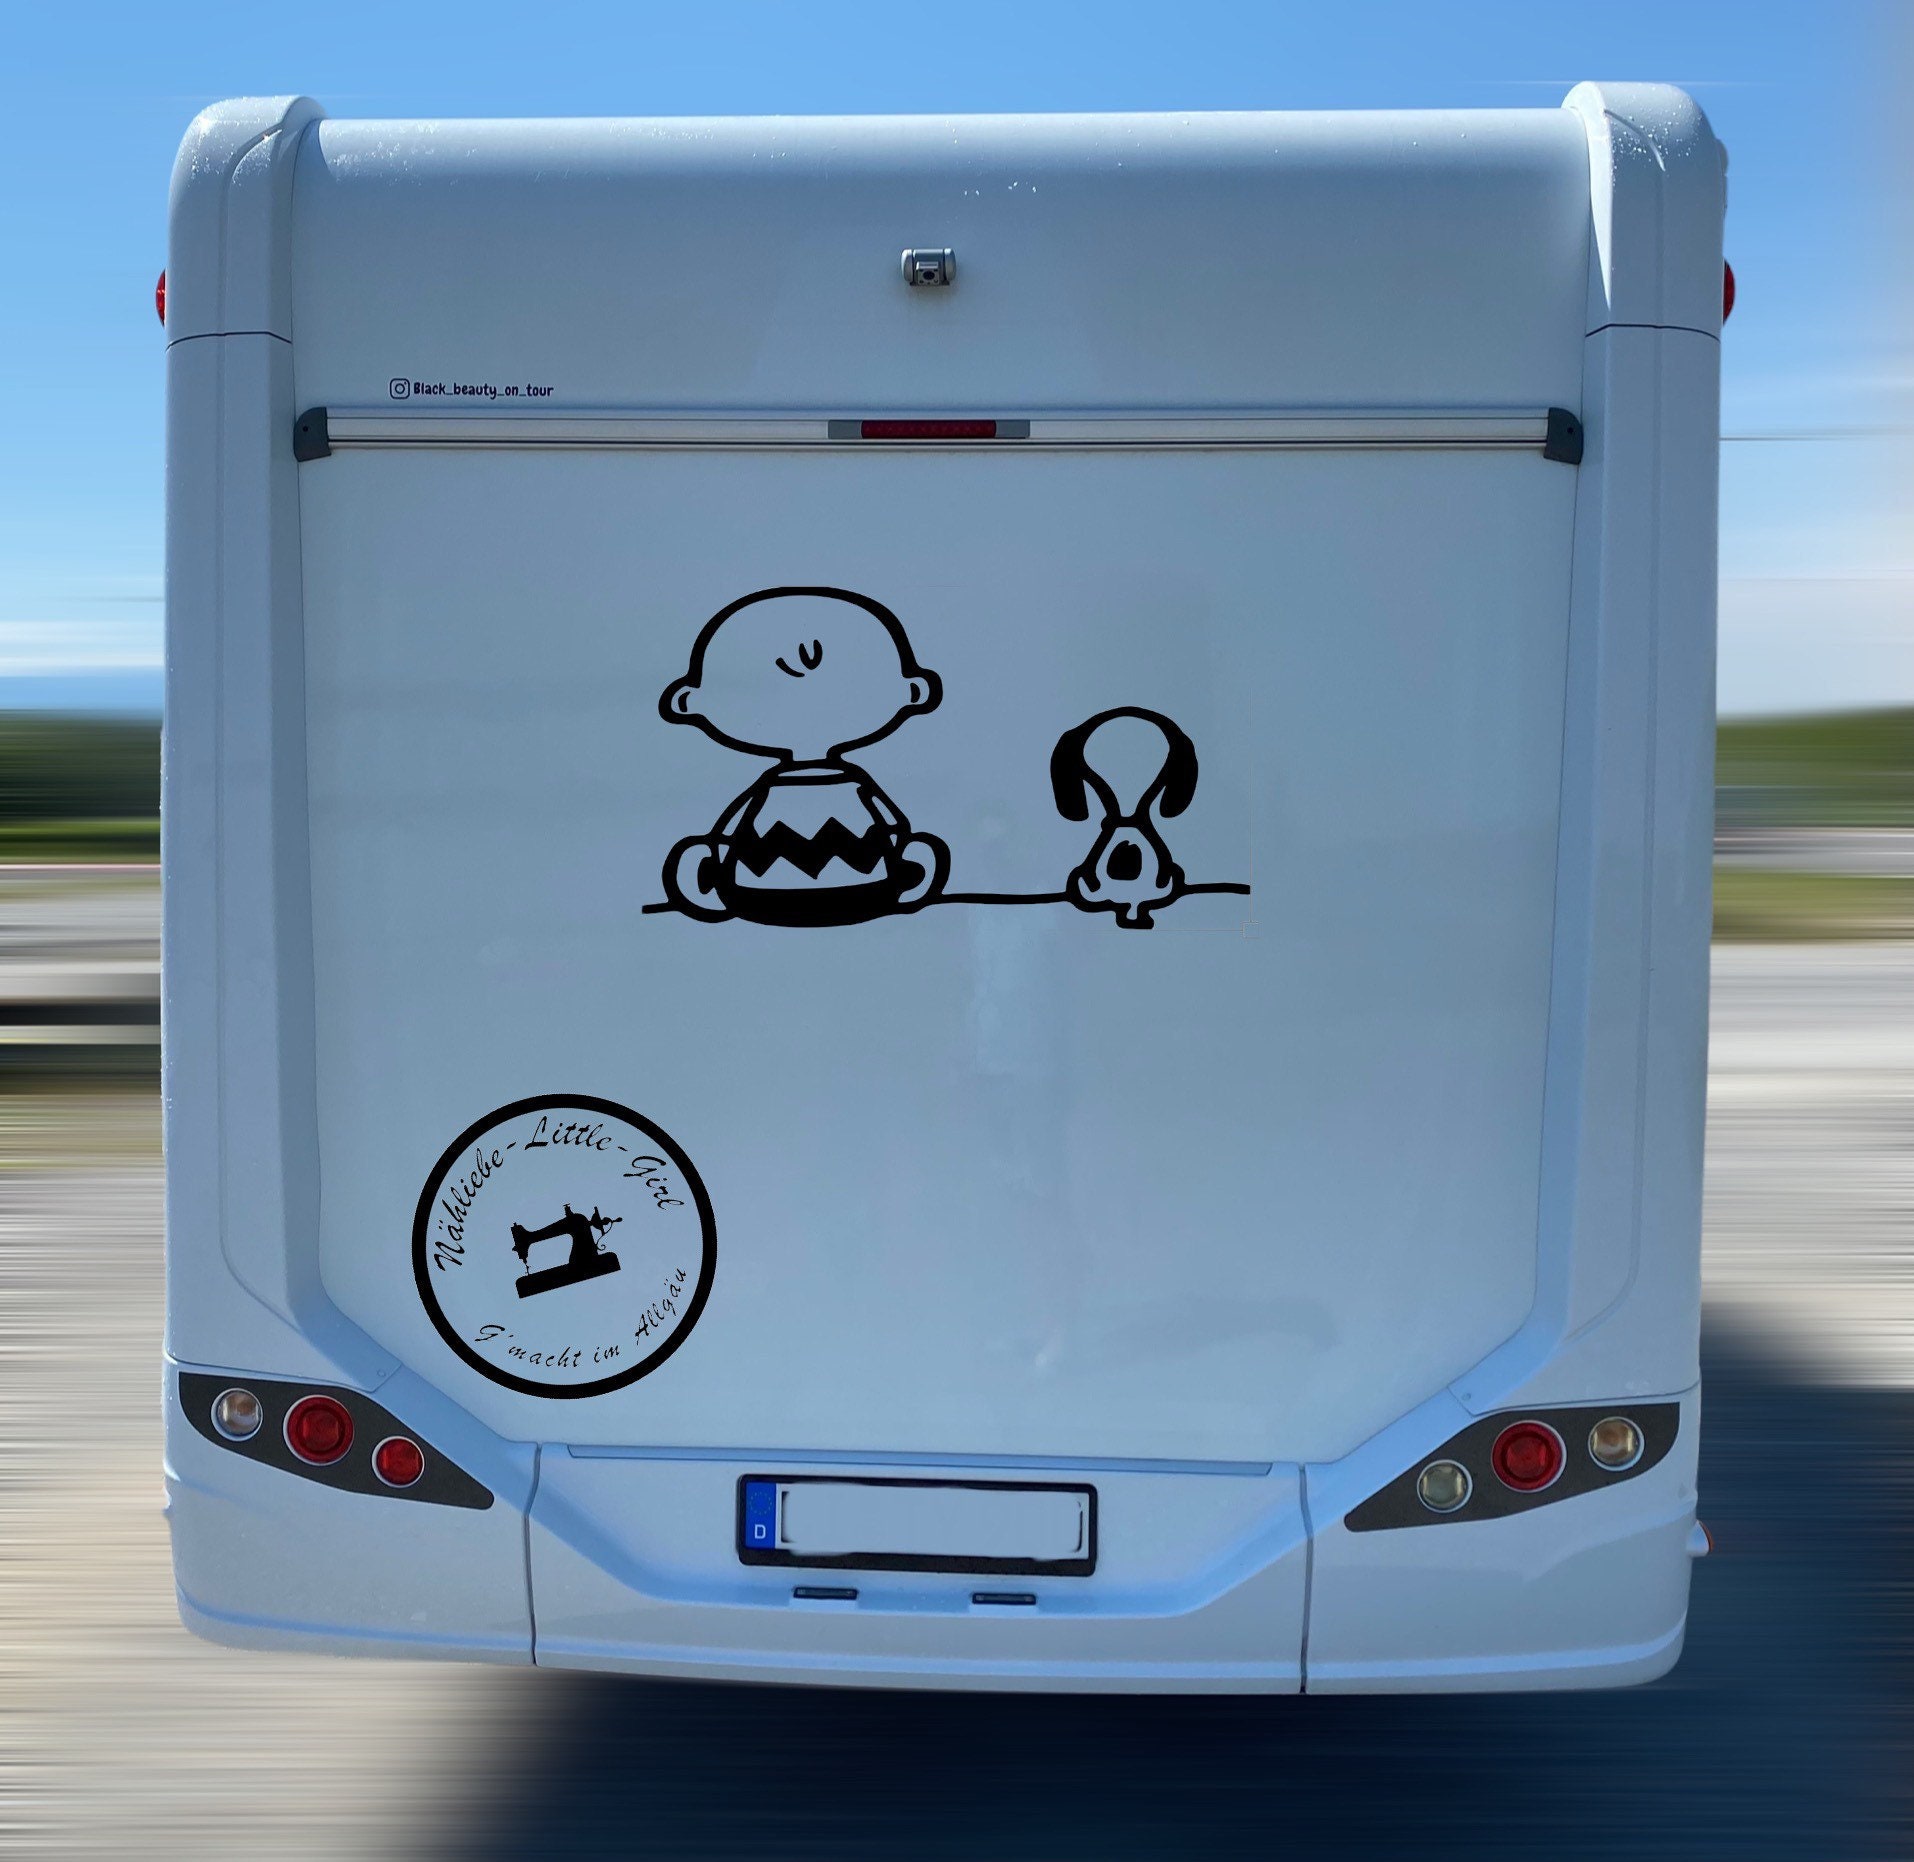 Aufkleber Snoopy Charly 45x27cm S086T Wunschfarbe, Auto Wohnmobil Wohnwagen  Bus